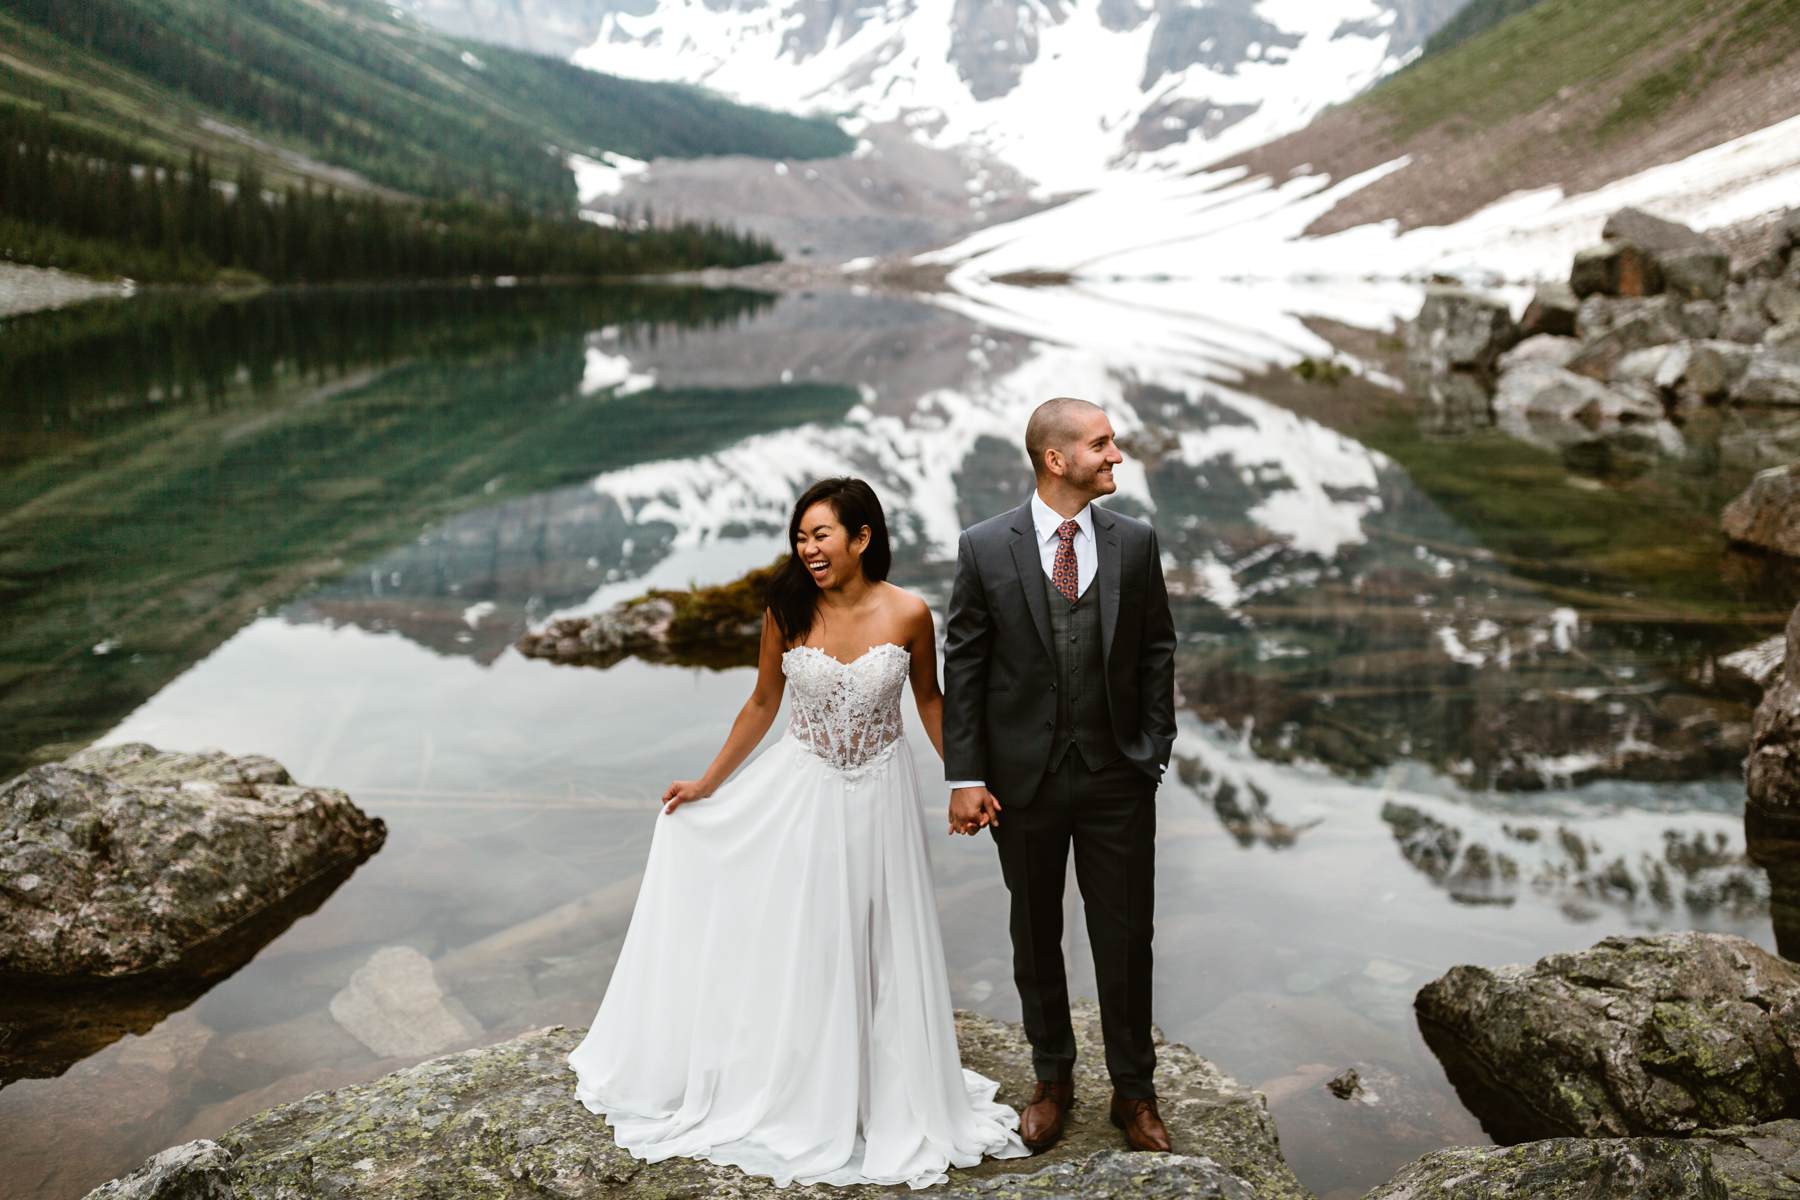 Intimate Wedding Photographers in Banff National Park - Photo 13